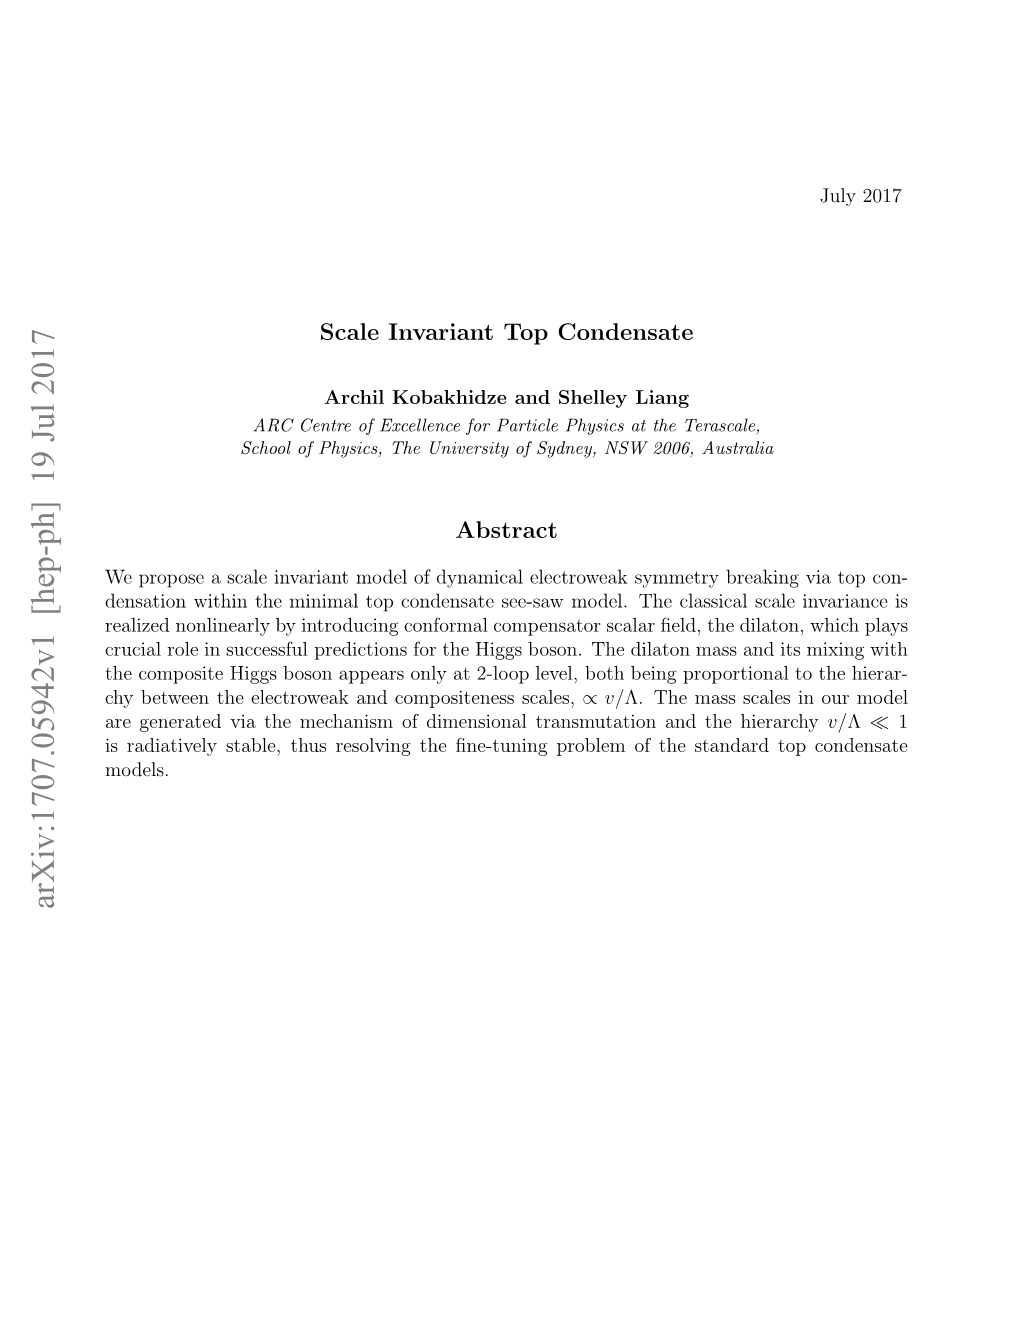 Scale Invariant Top Condensate